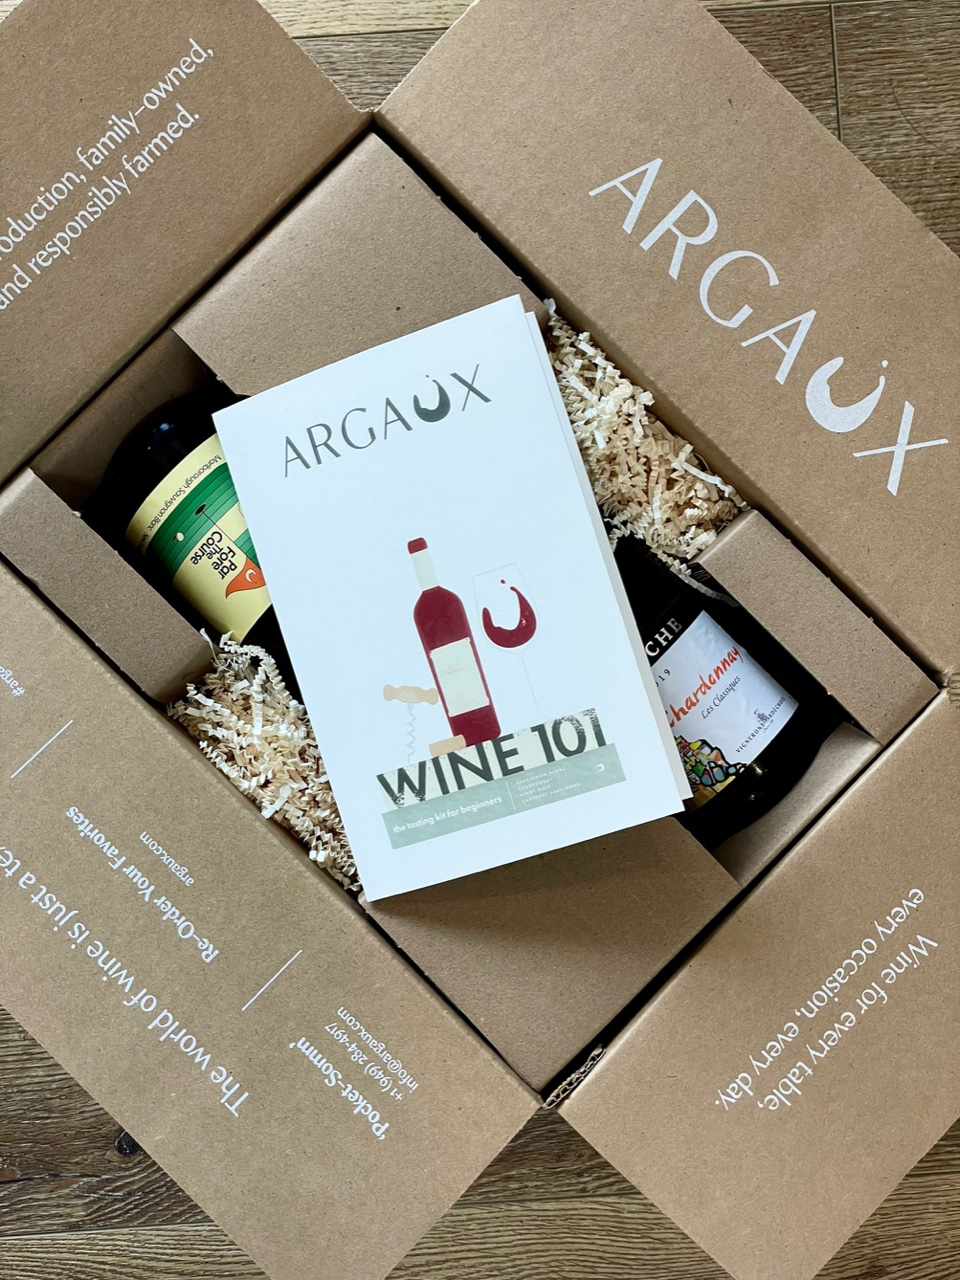 Argaux wine tasting kit